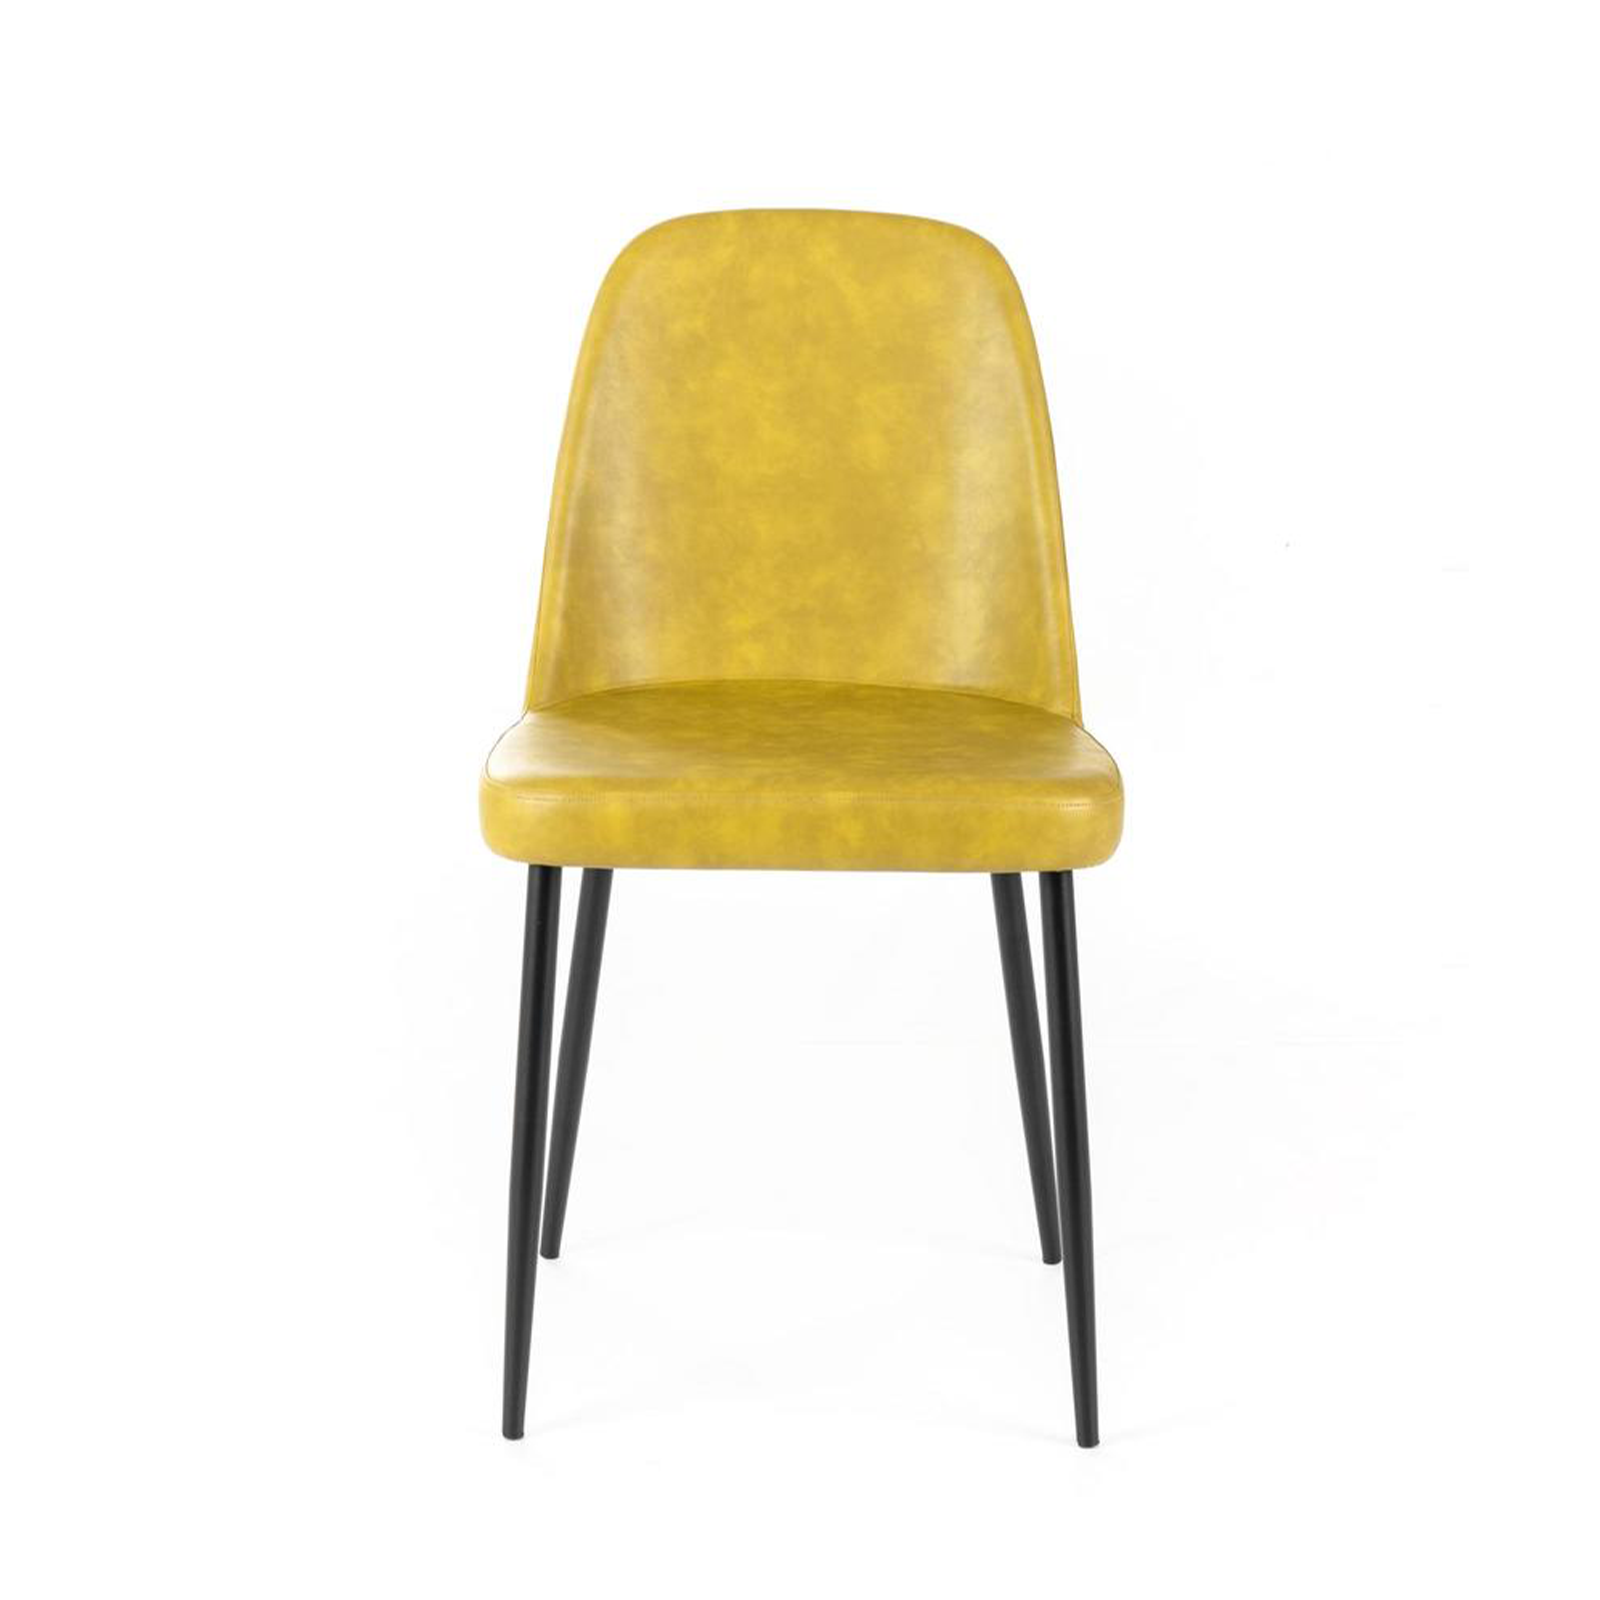 Chaise moderne rembourrée en simili cuir "Tamara" soft touch 45x52 cm 85h